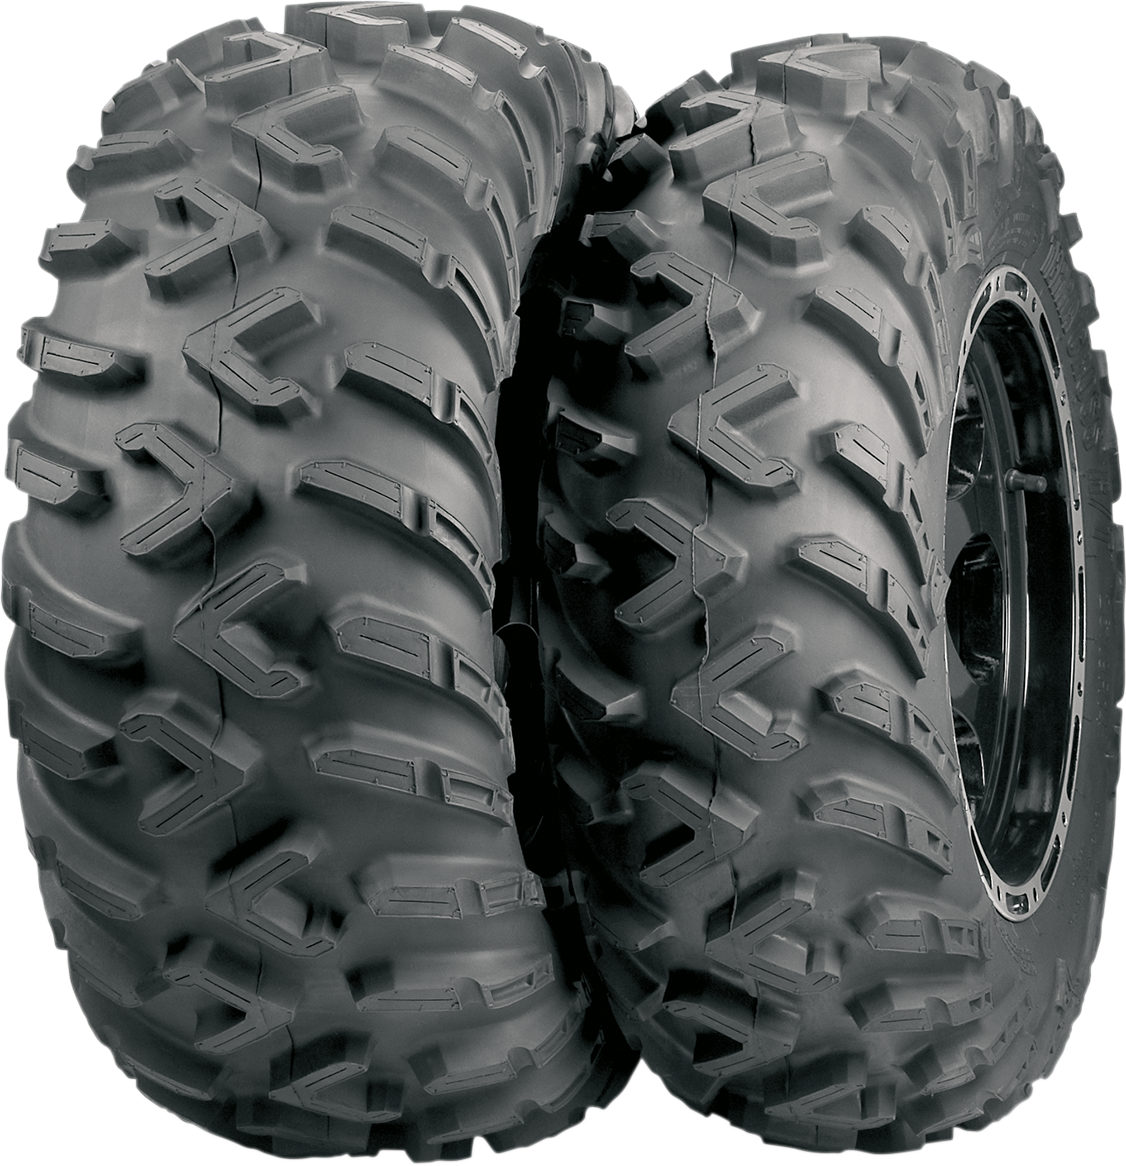 ITP Tire - Terracross R/T - Rear - 26x11R14 - 6 Ply 560412